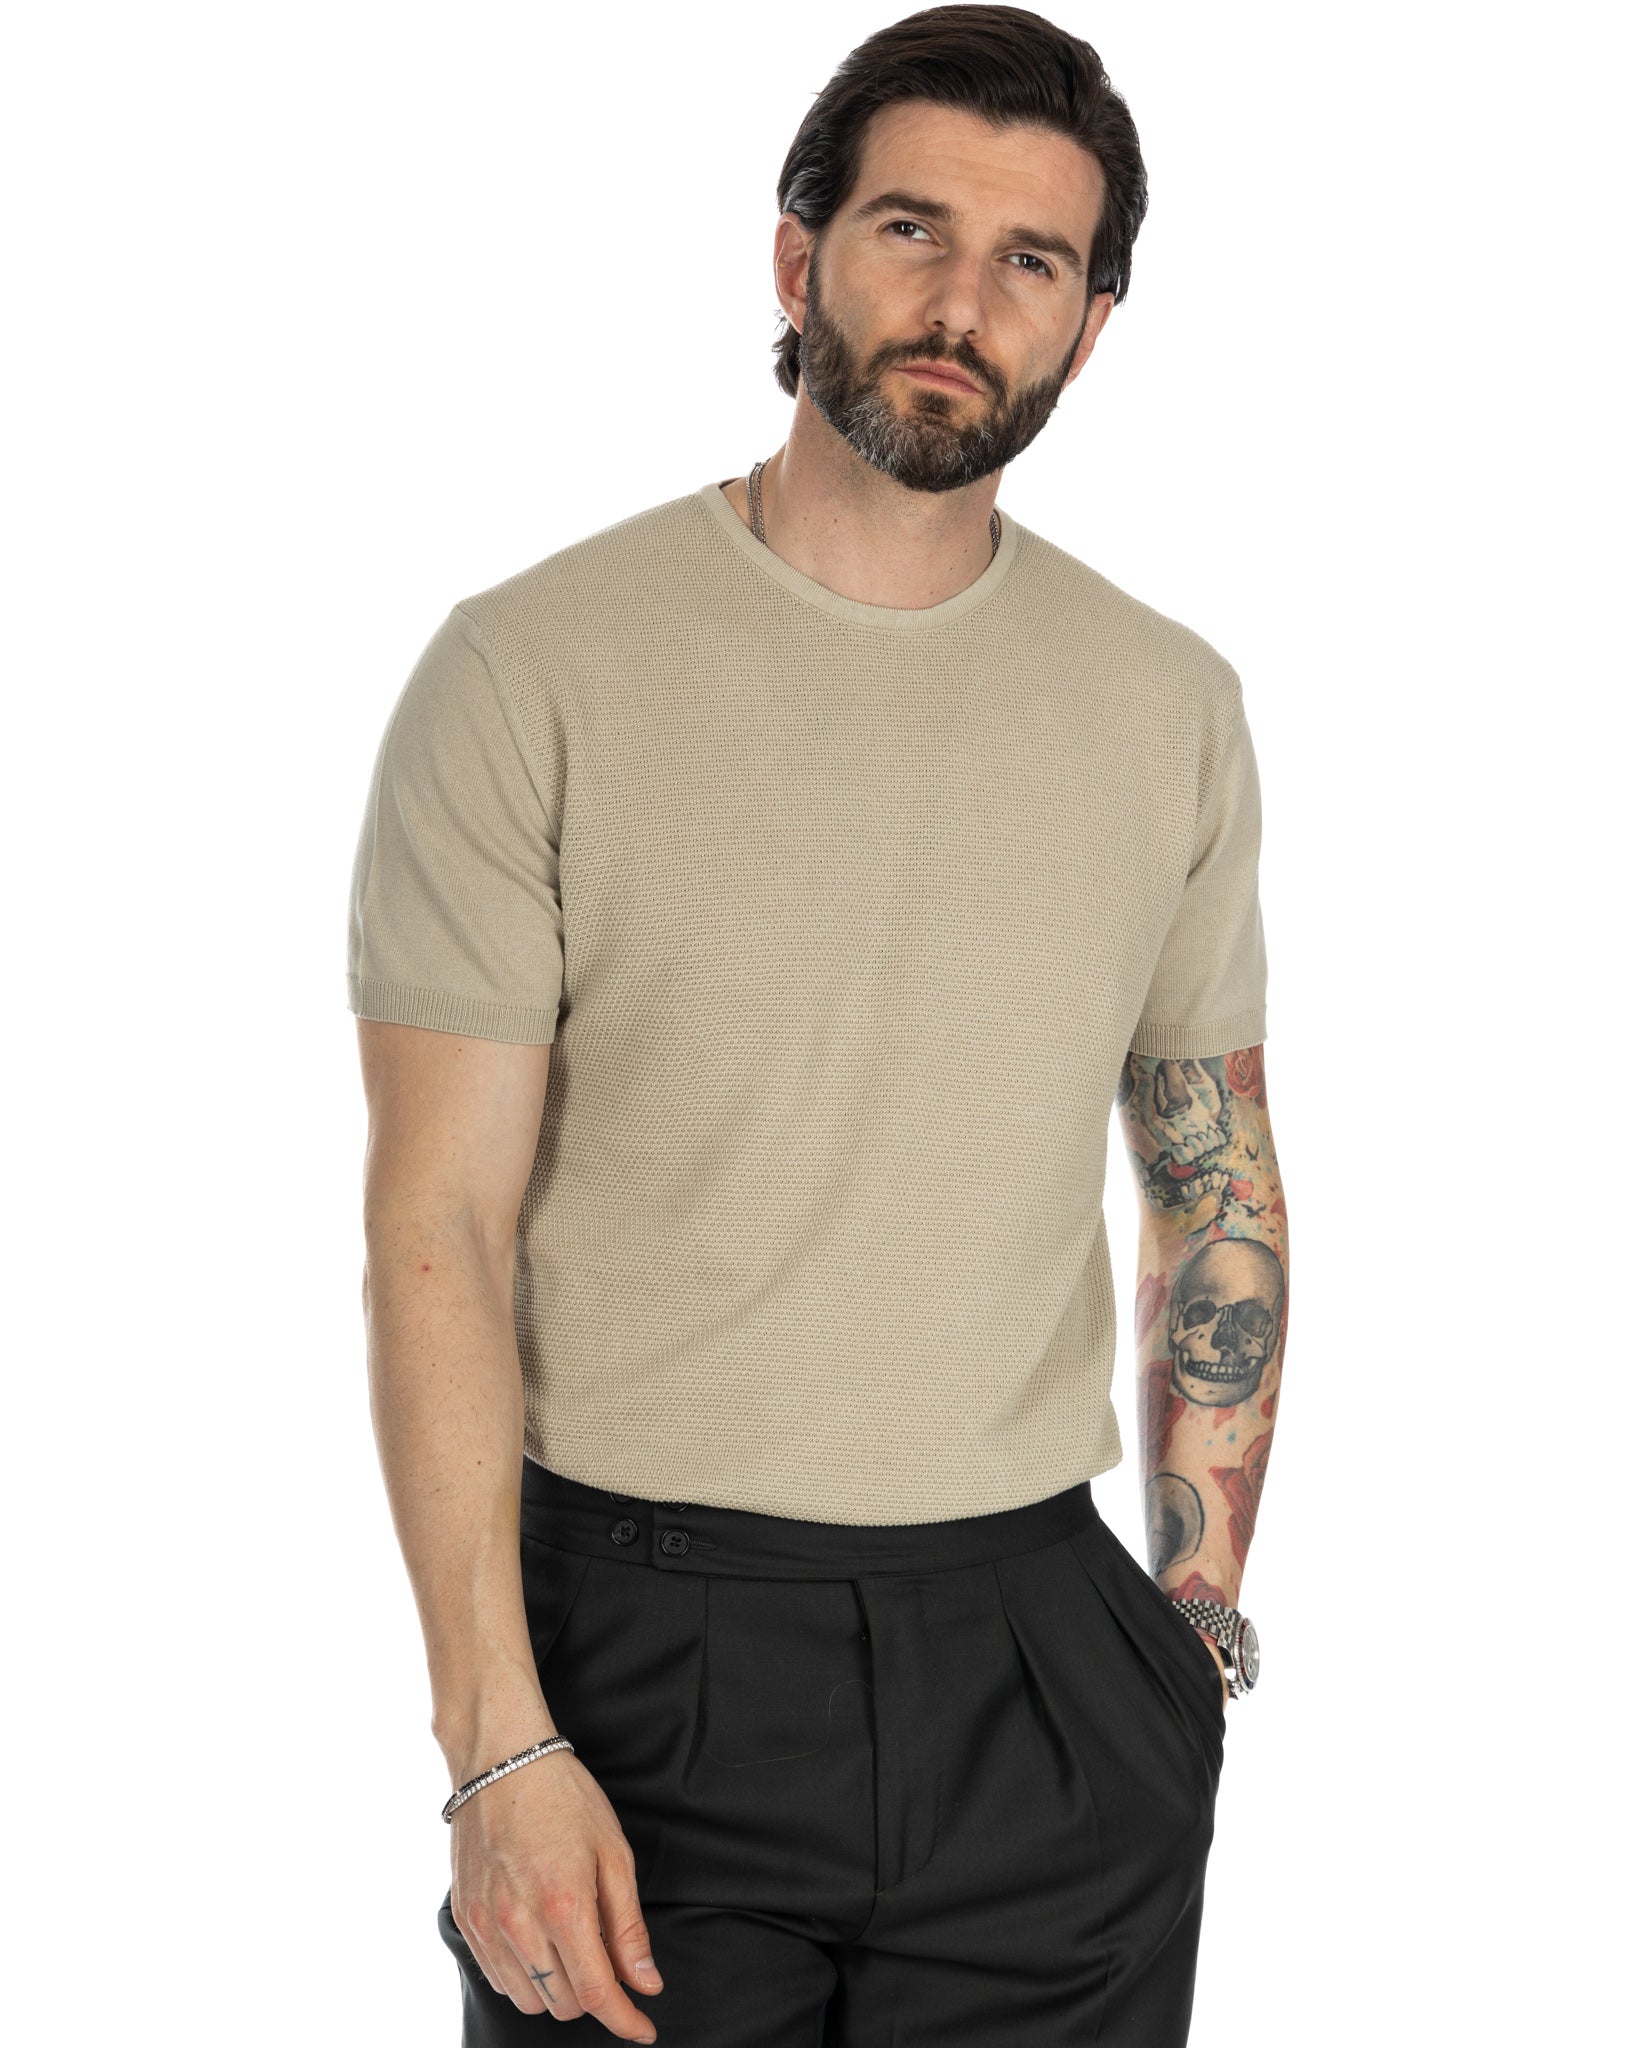 Lorenzo - beige jacquard knit t-shirt